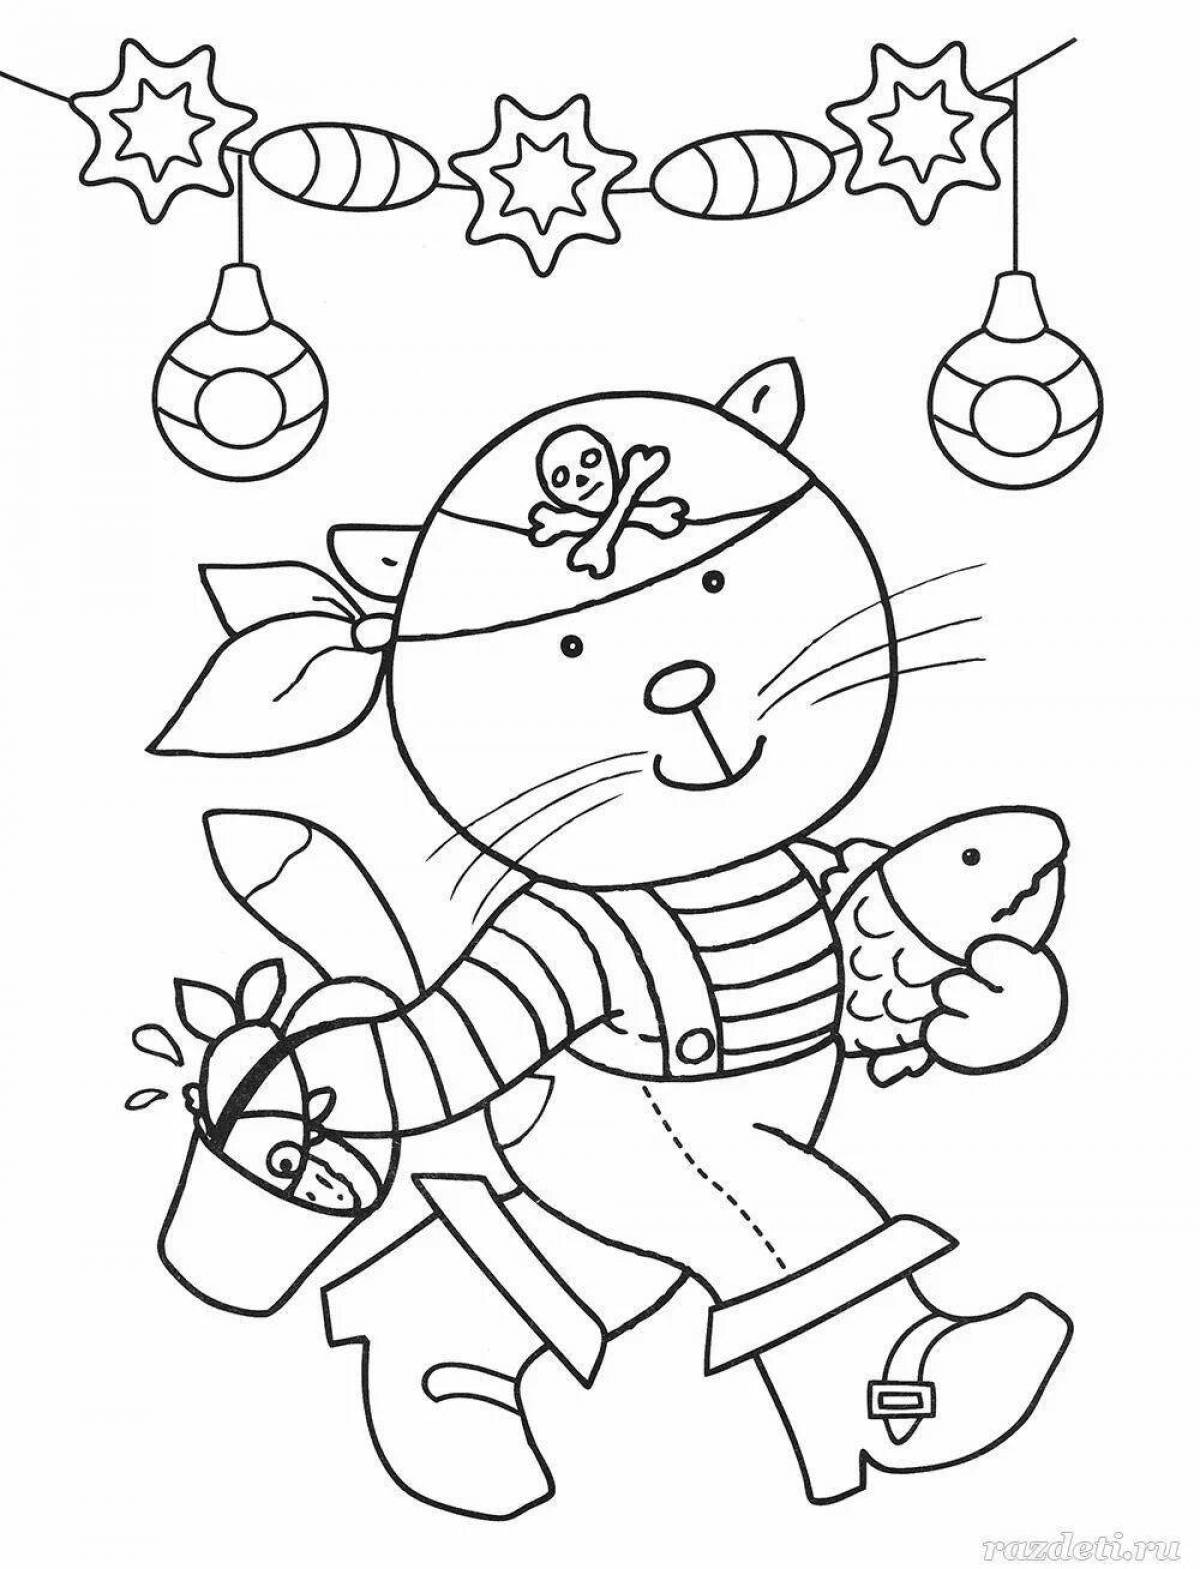 Joyful Christmas coloring book for preschoolers